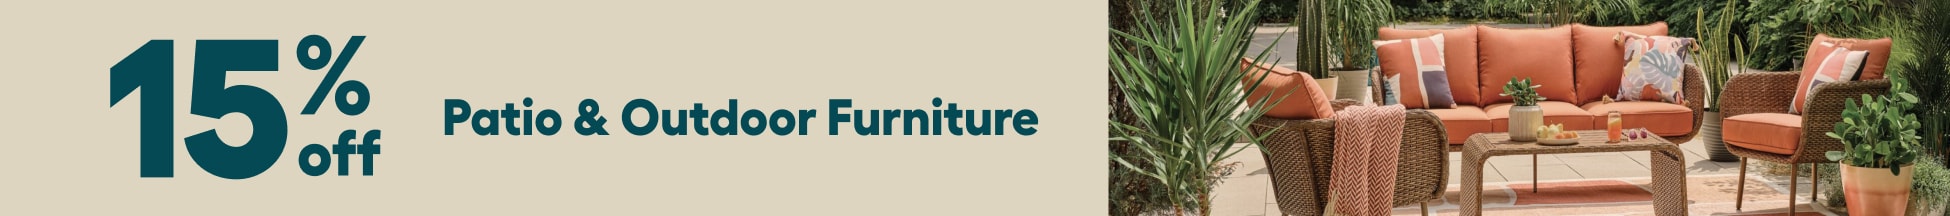 Outdoor Furniture promo